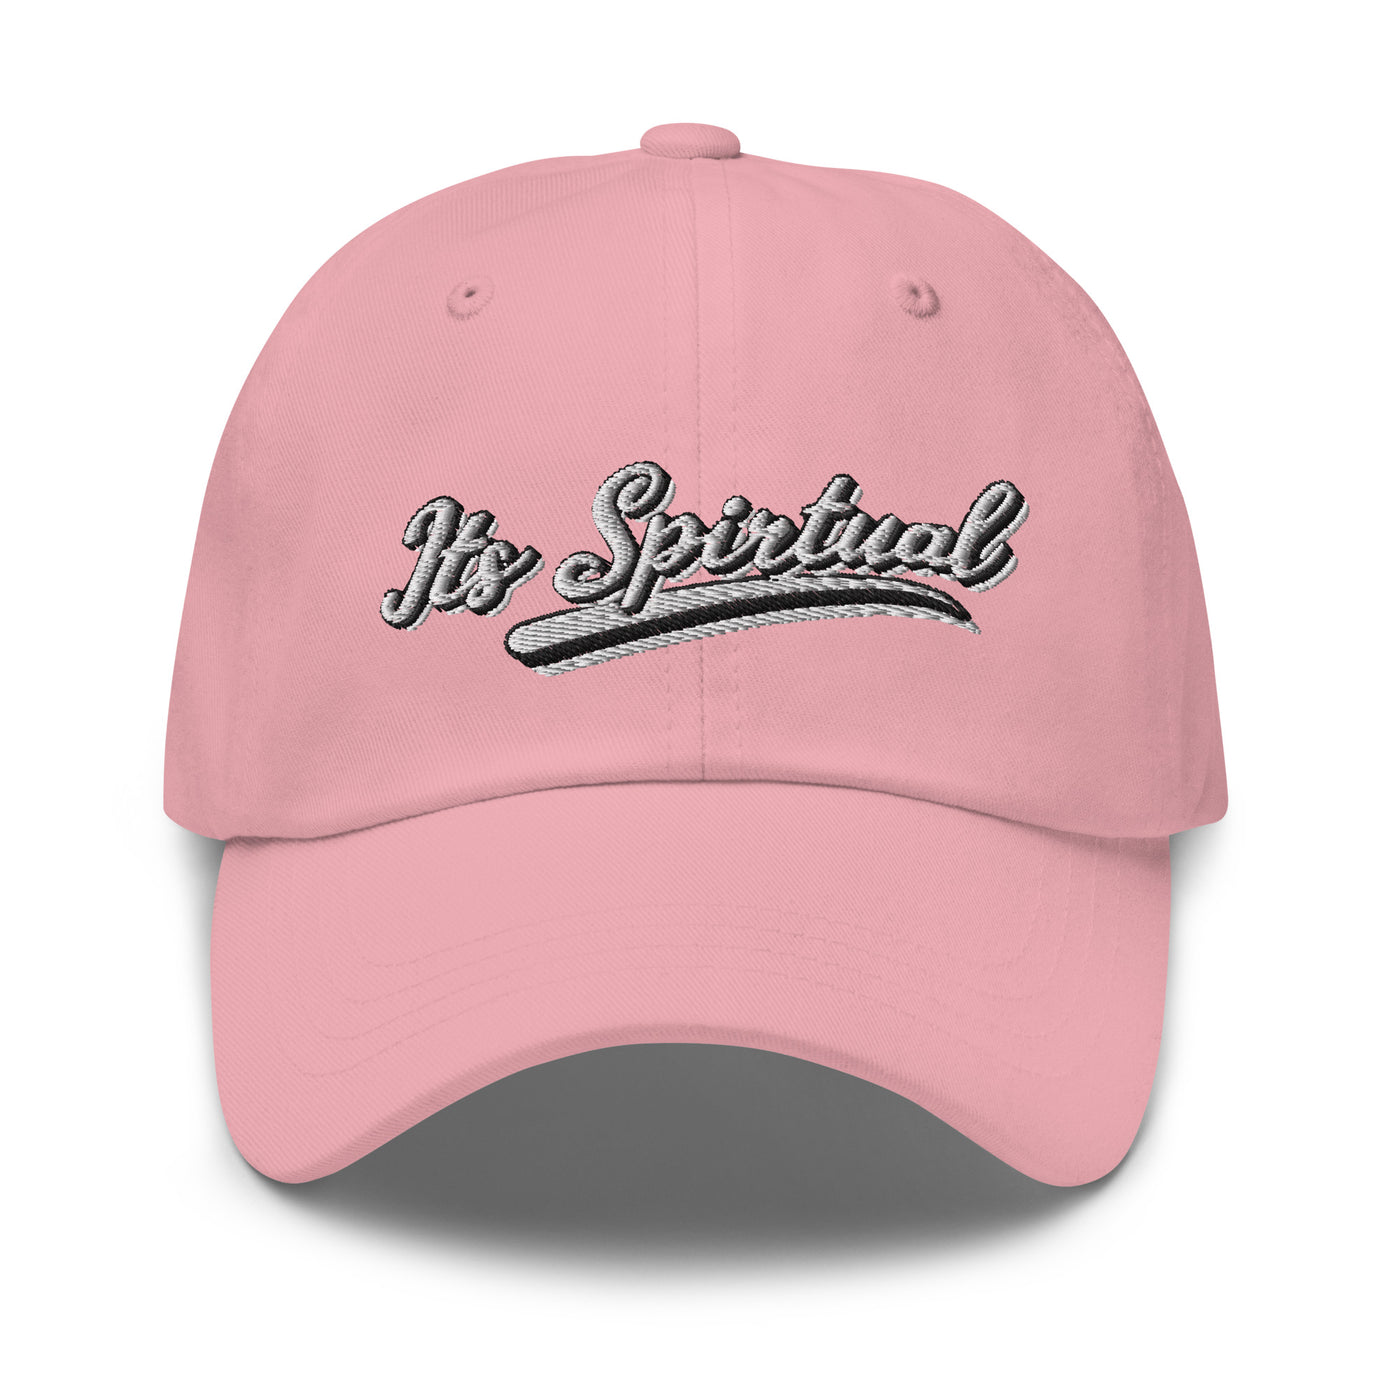 F&H Christian Its Spiritual hat